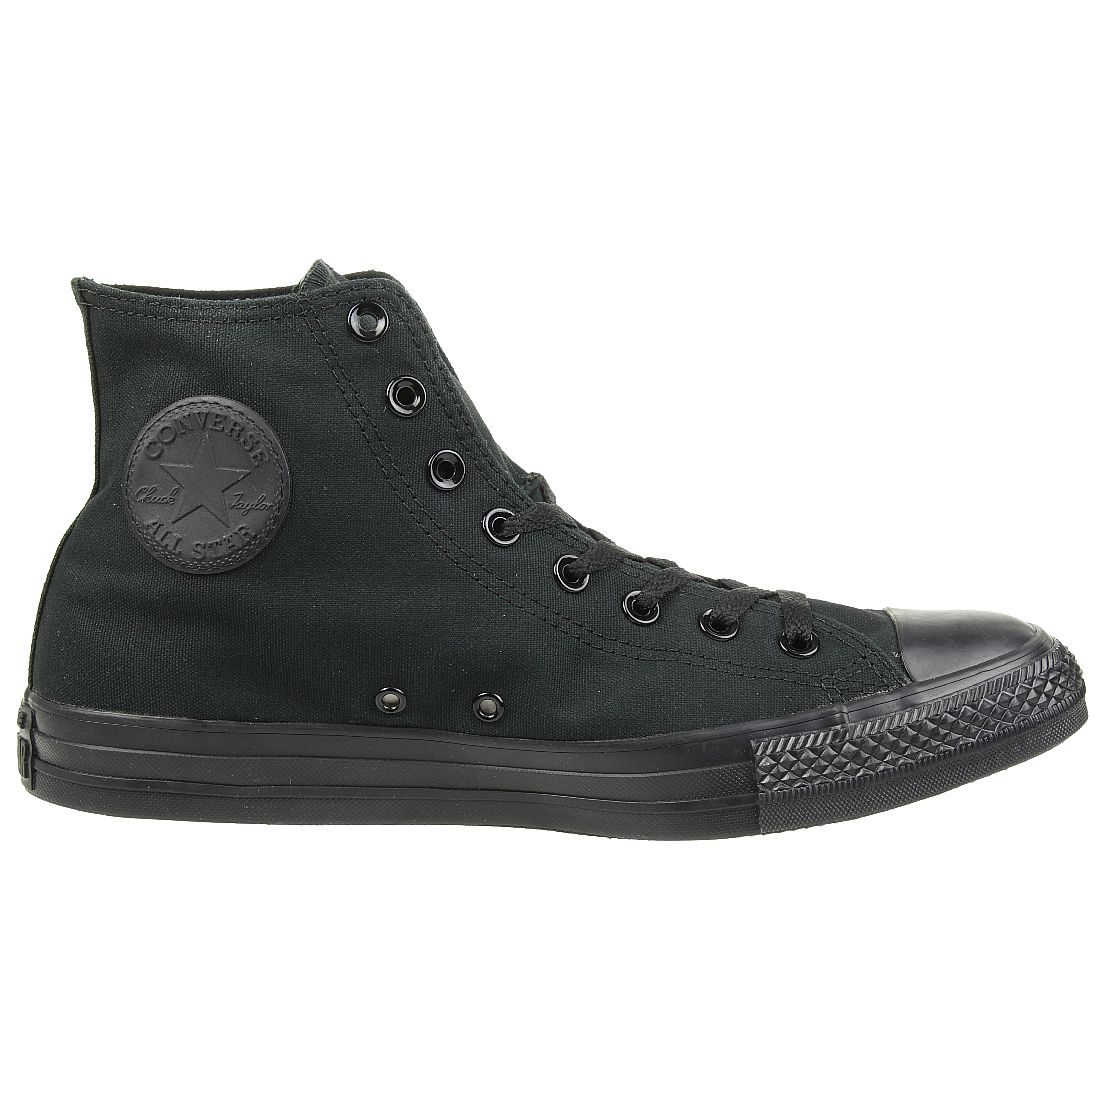 Converse C Taylor A/S HI Chuck Schuhe Sneaker canvas Schwarz M3310C